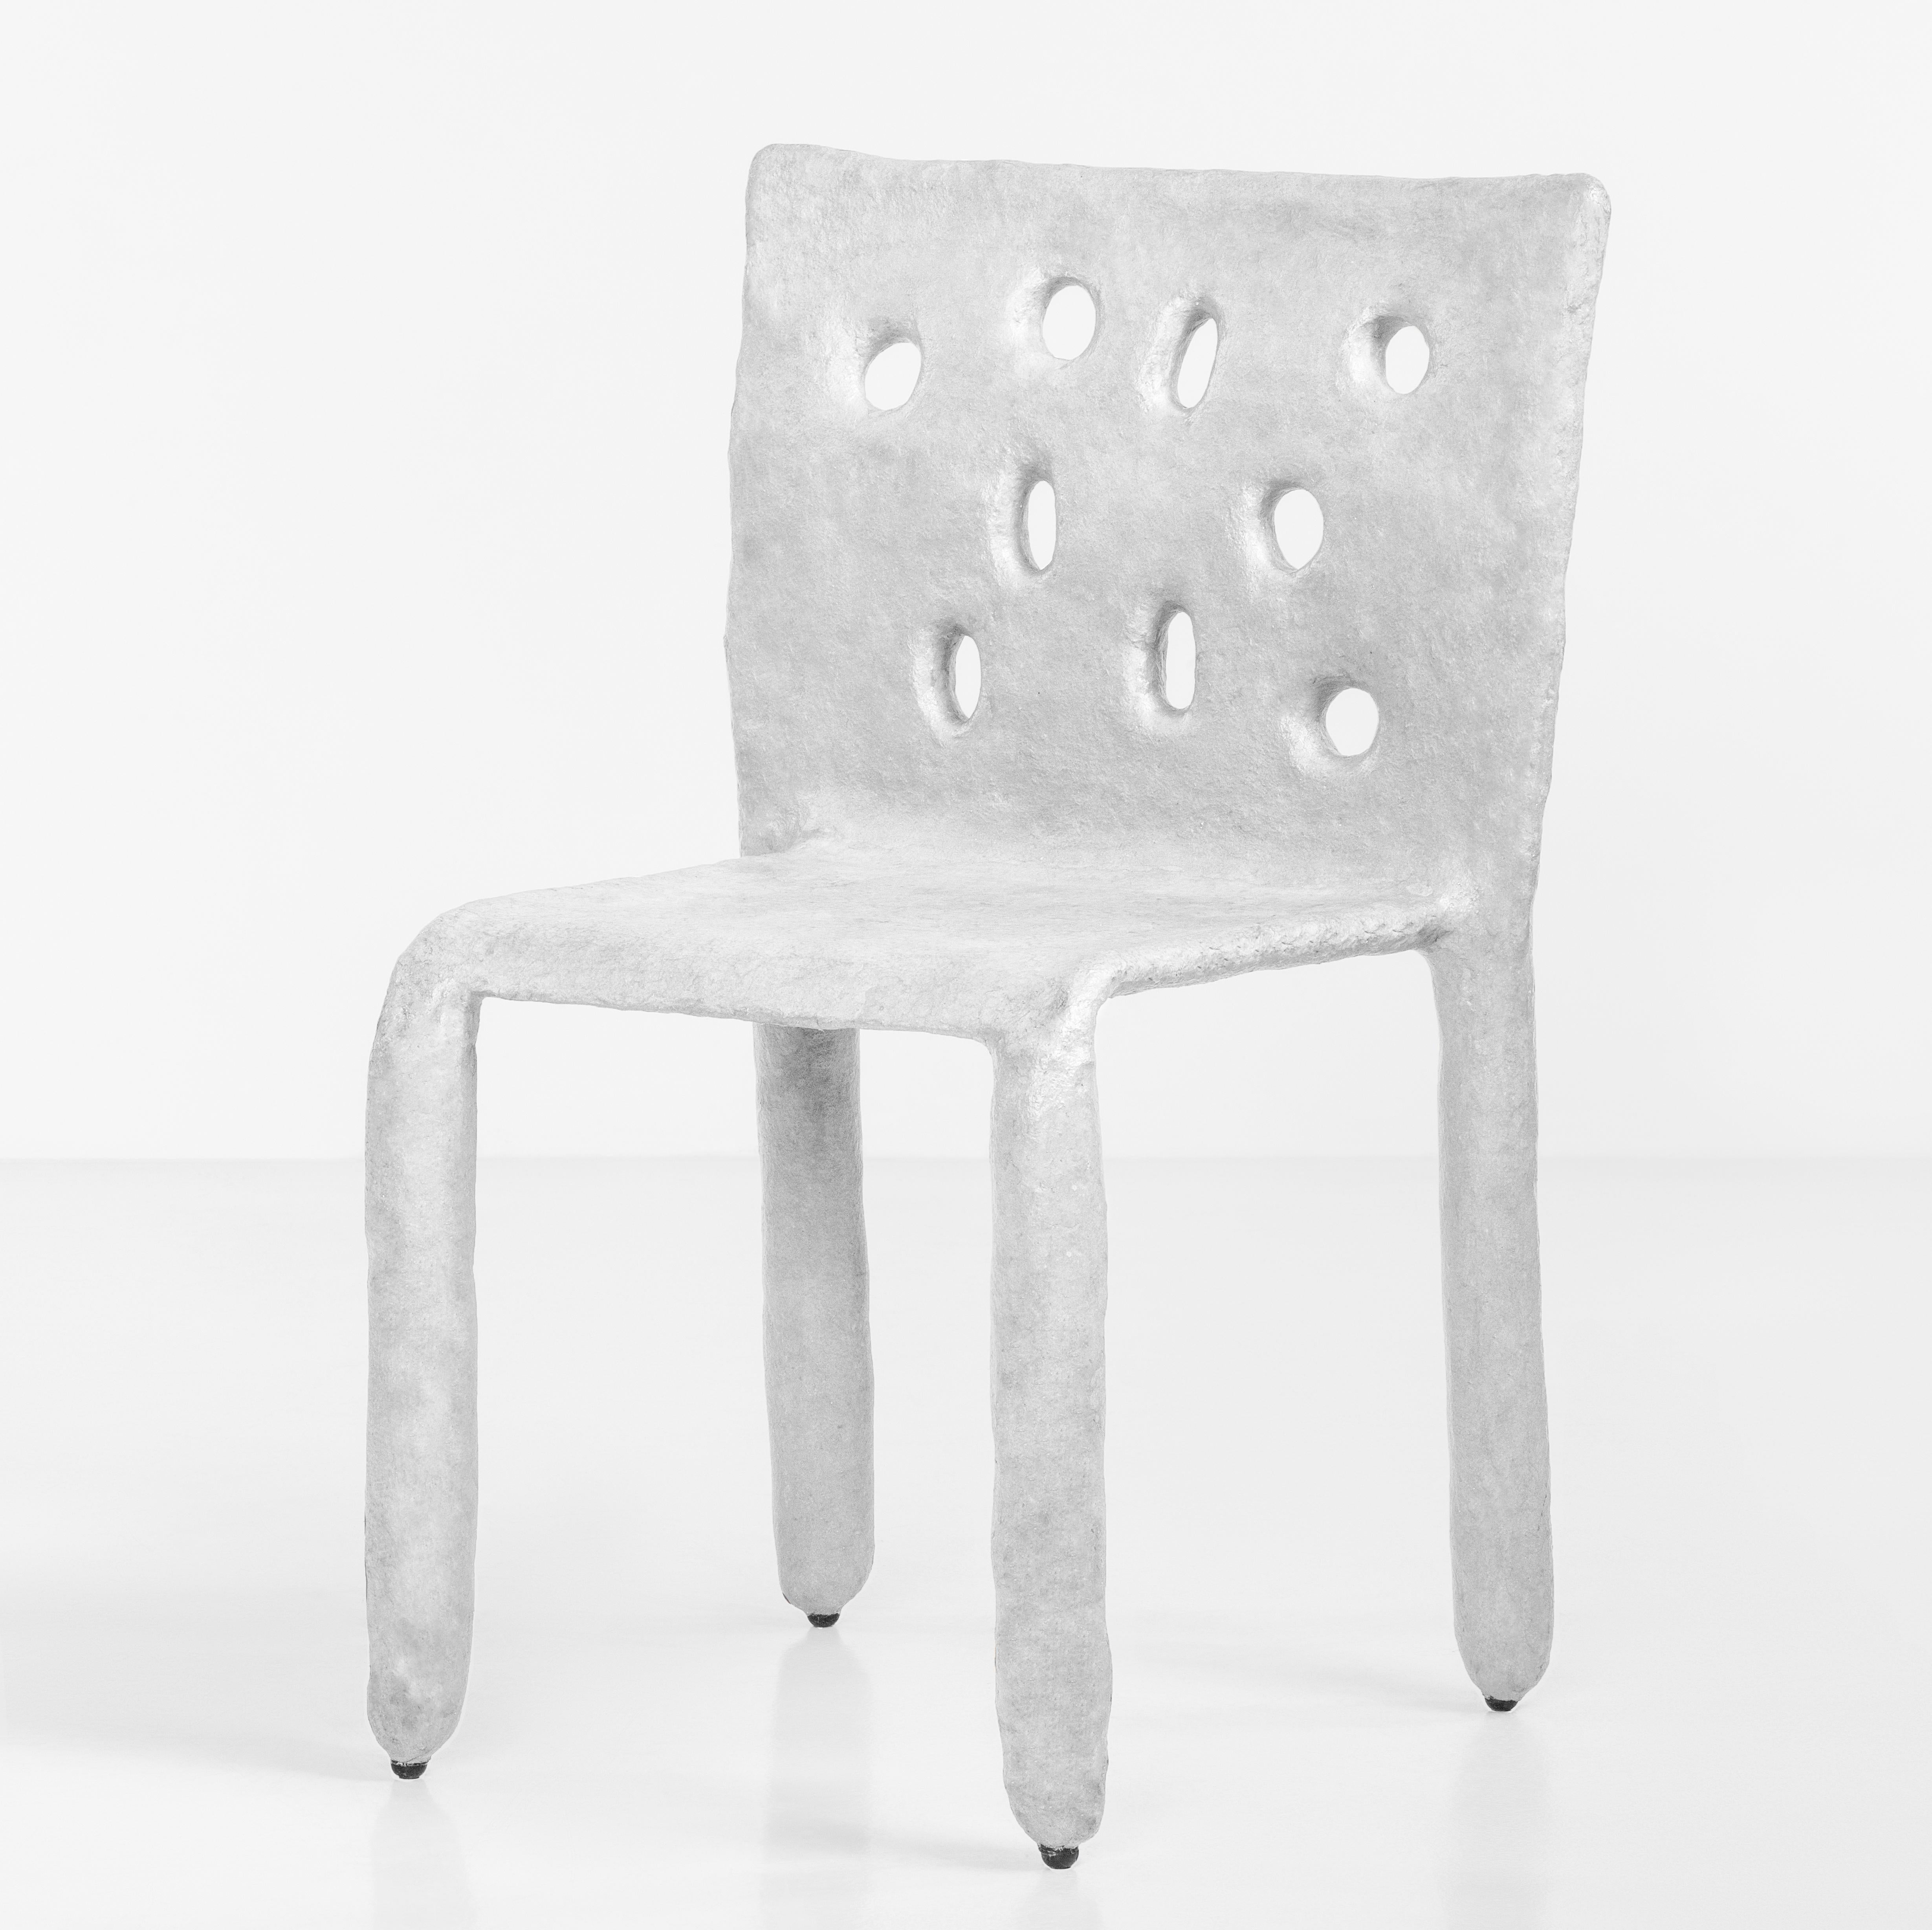 Orange Sculpted Contemporary Chair by FAINA 1